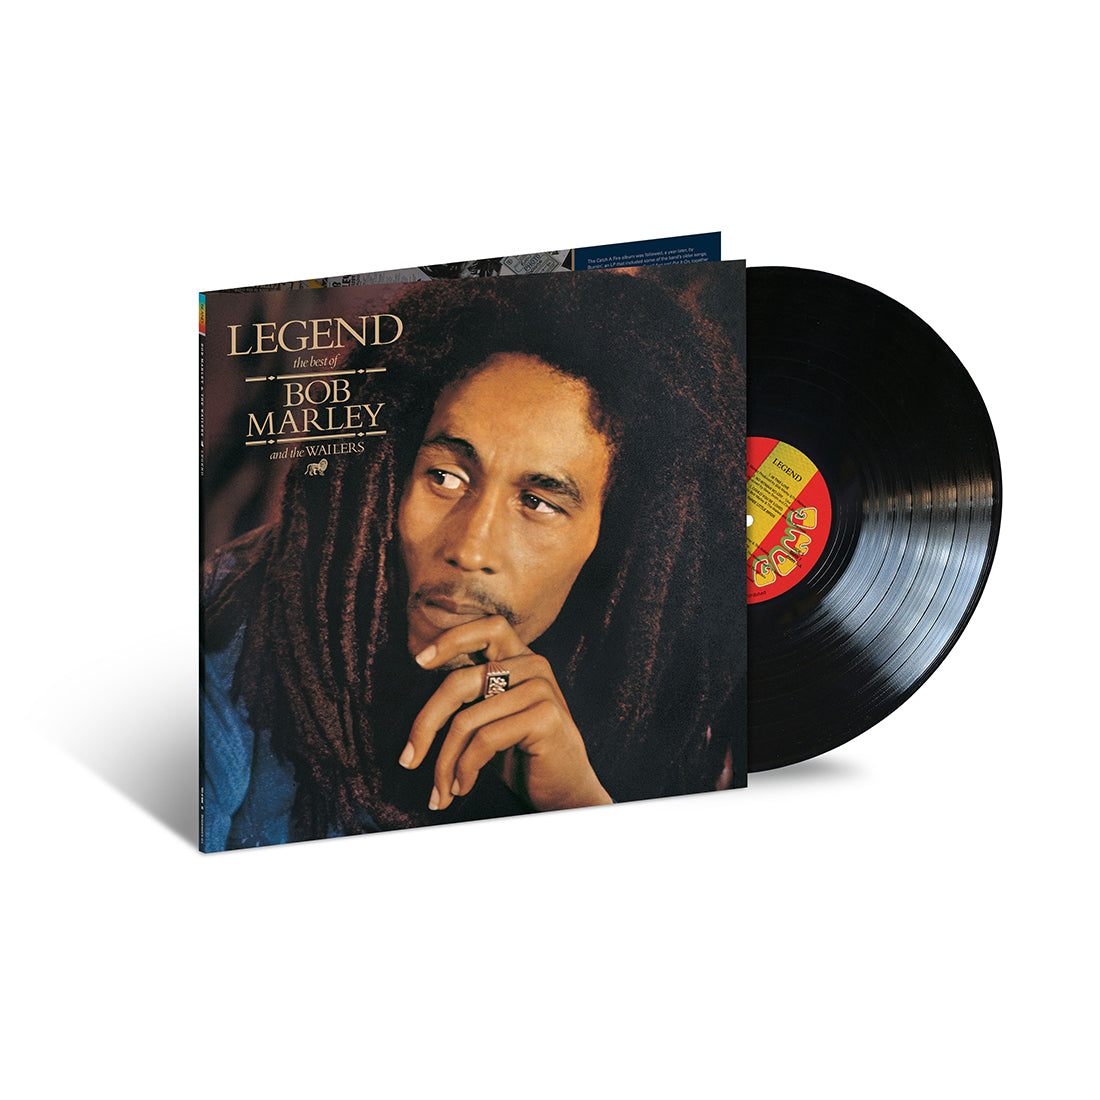 Bob Marley - Legend: Exclusive Tuff Gong Pressing LP